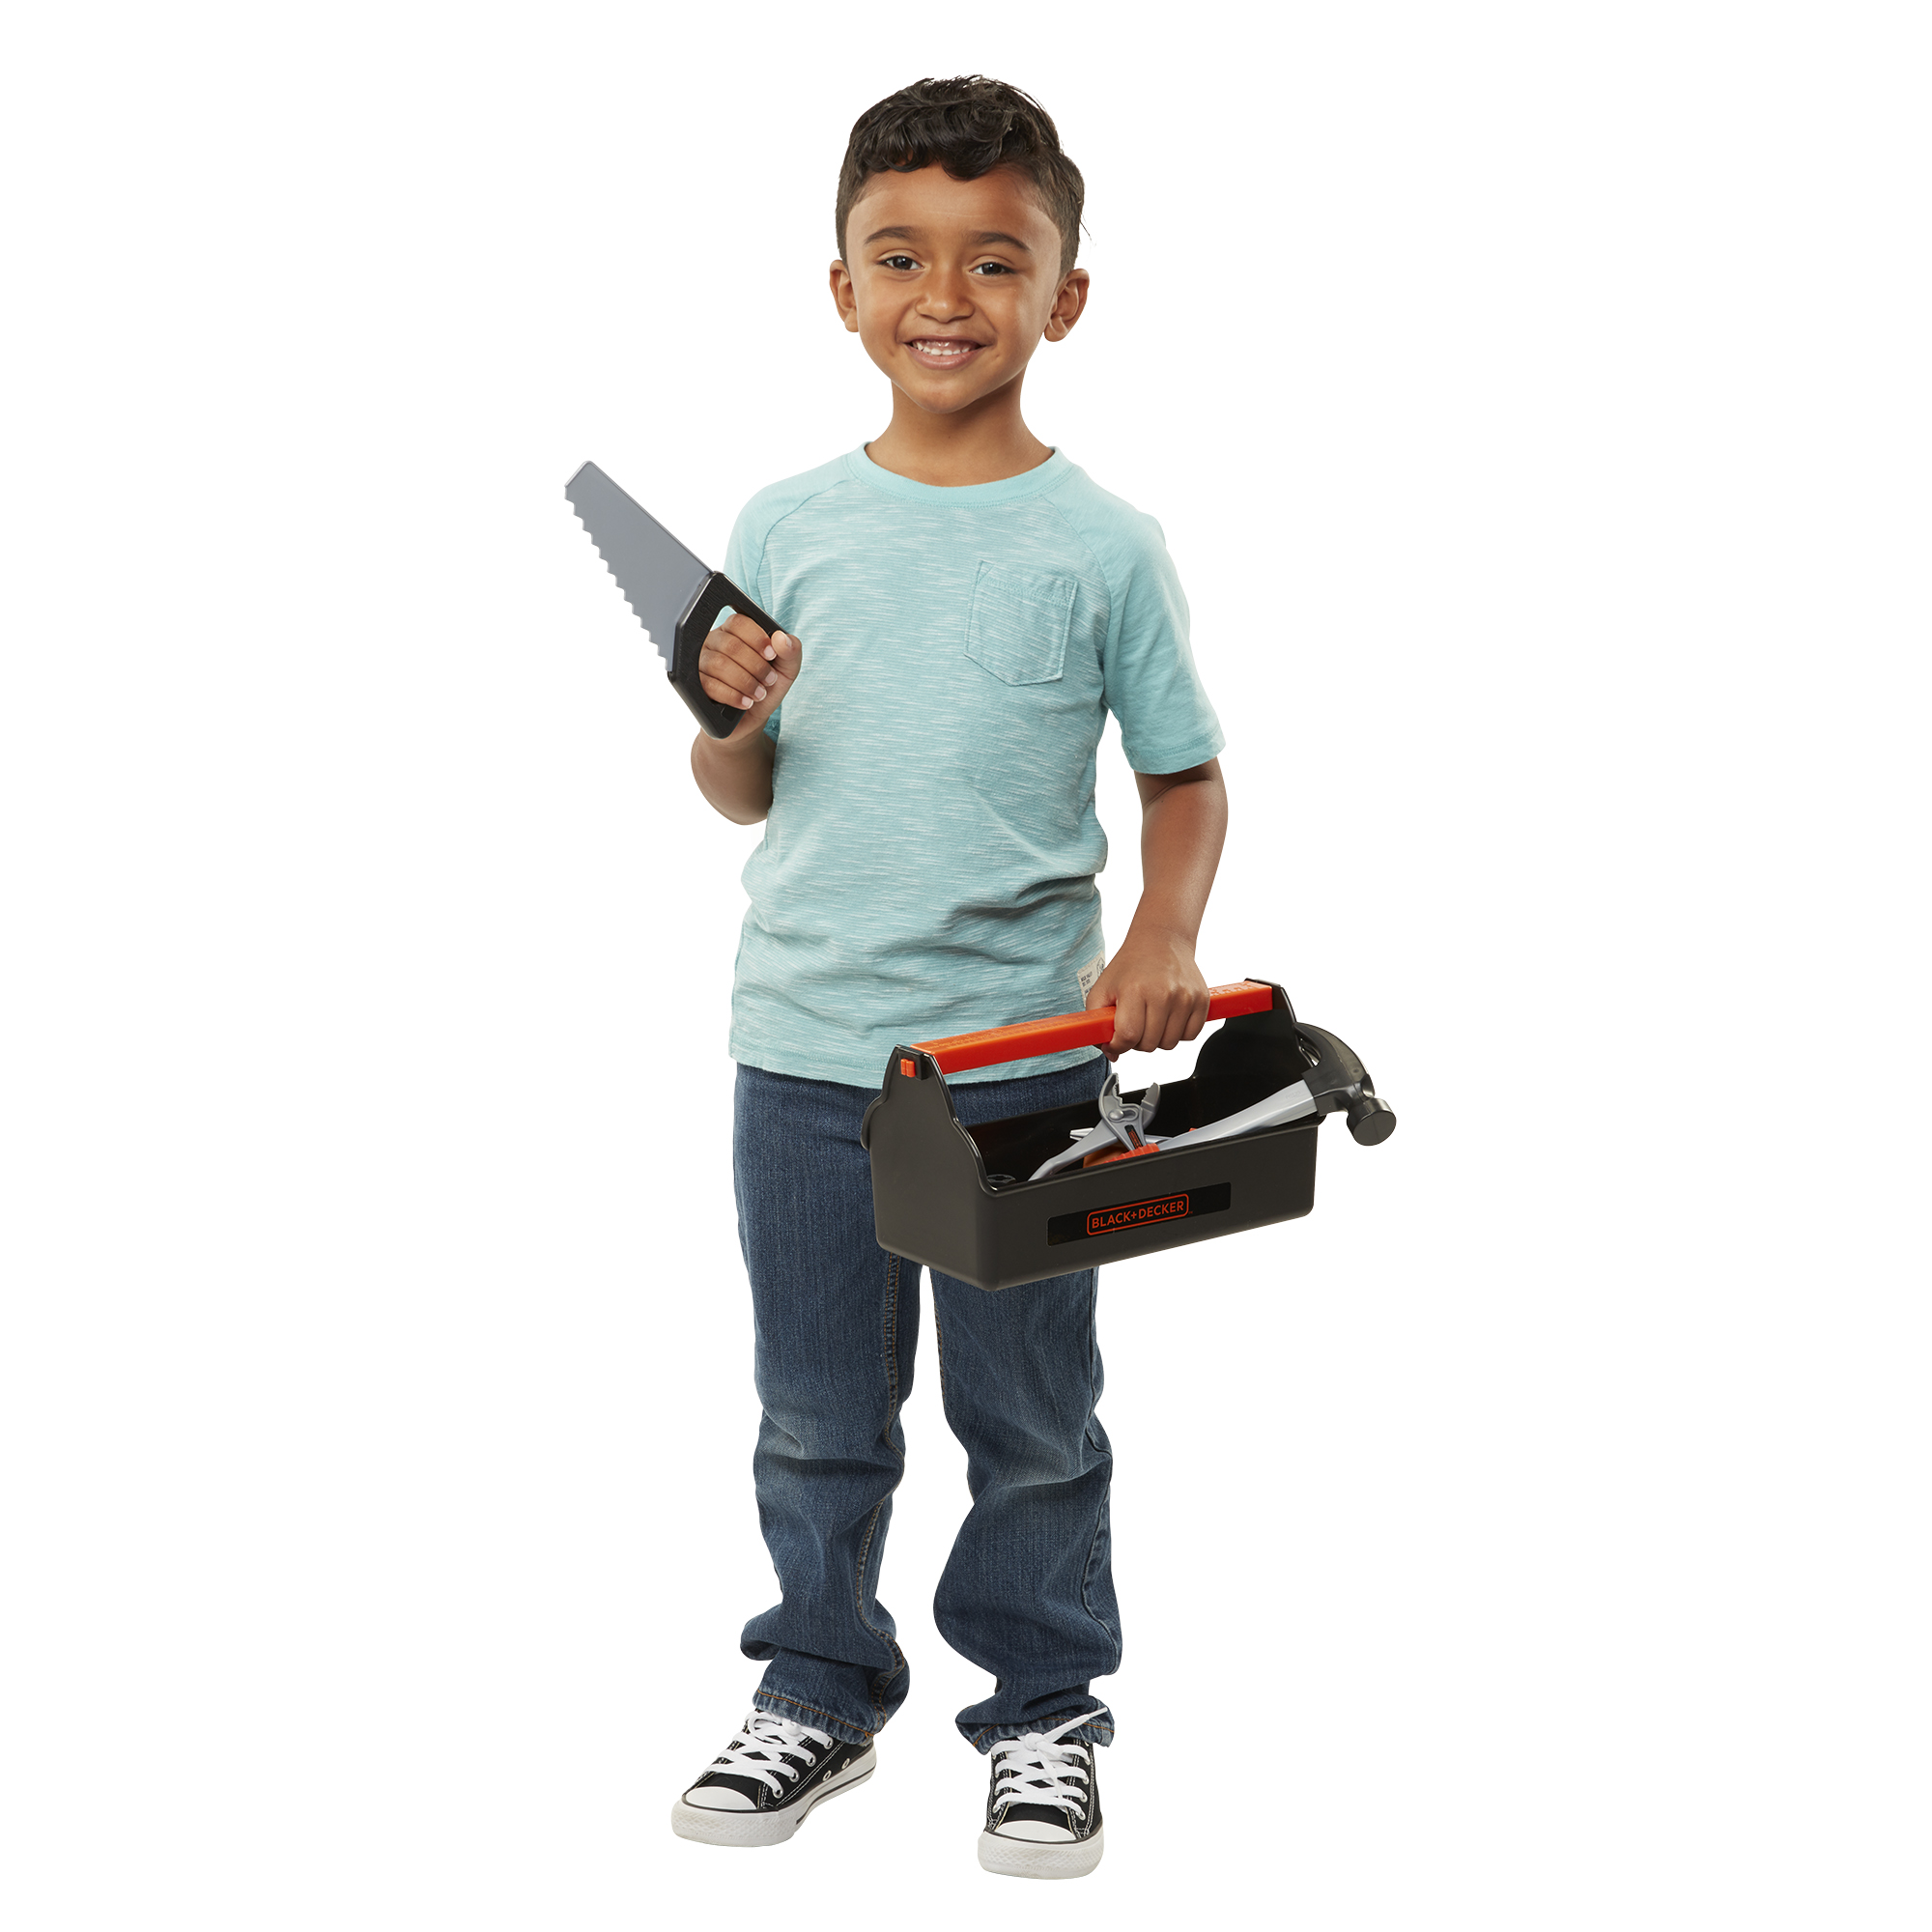 Junior Reciprocating Saw Power Tool - JAKKS Pacific, Inc.